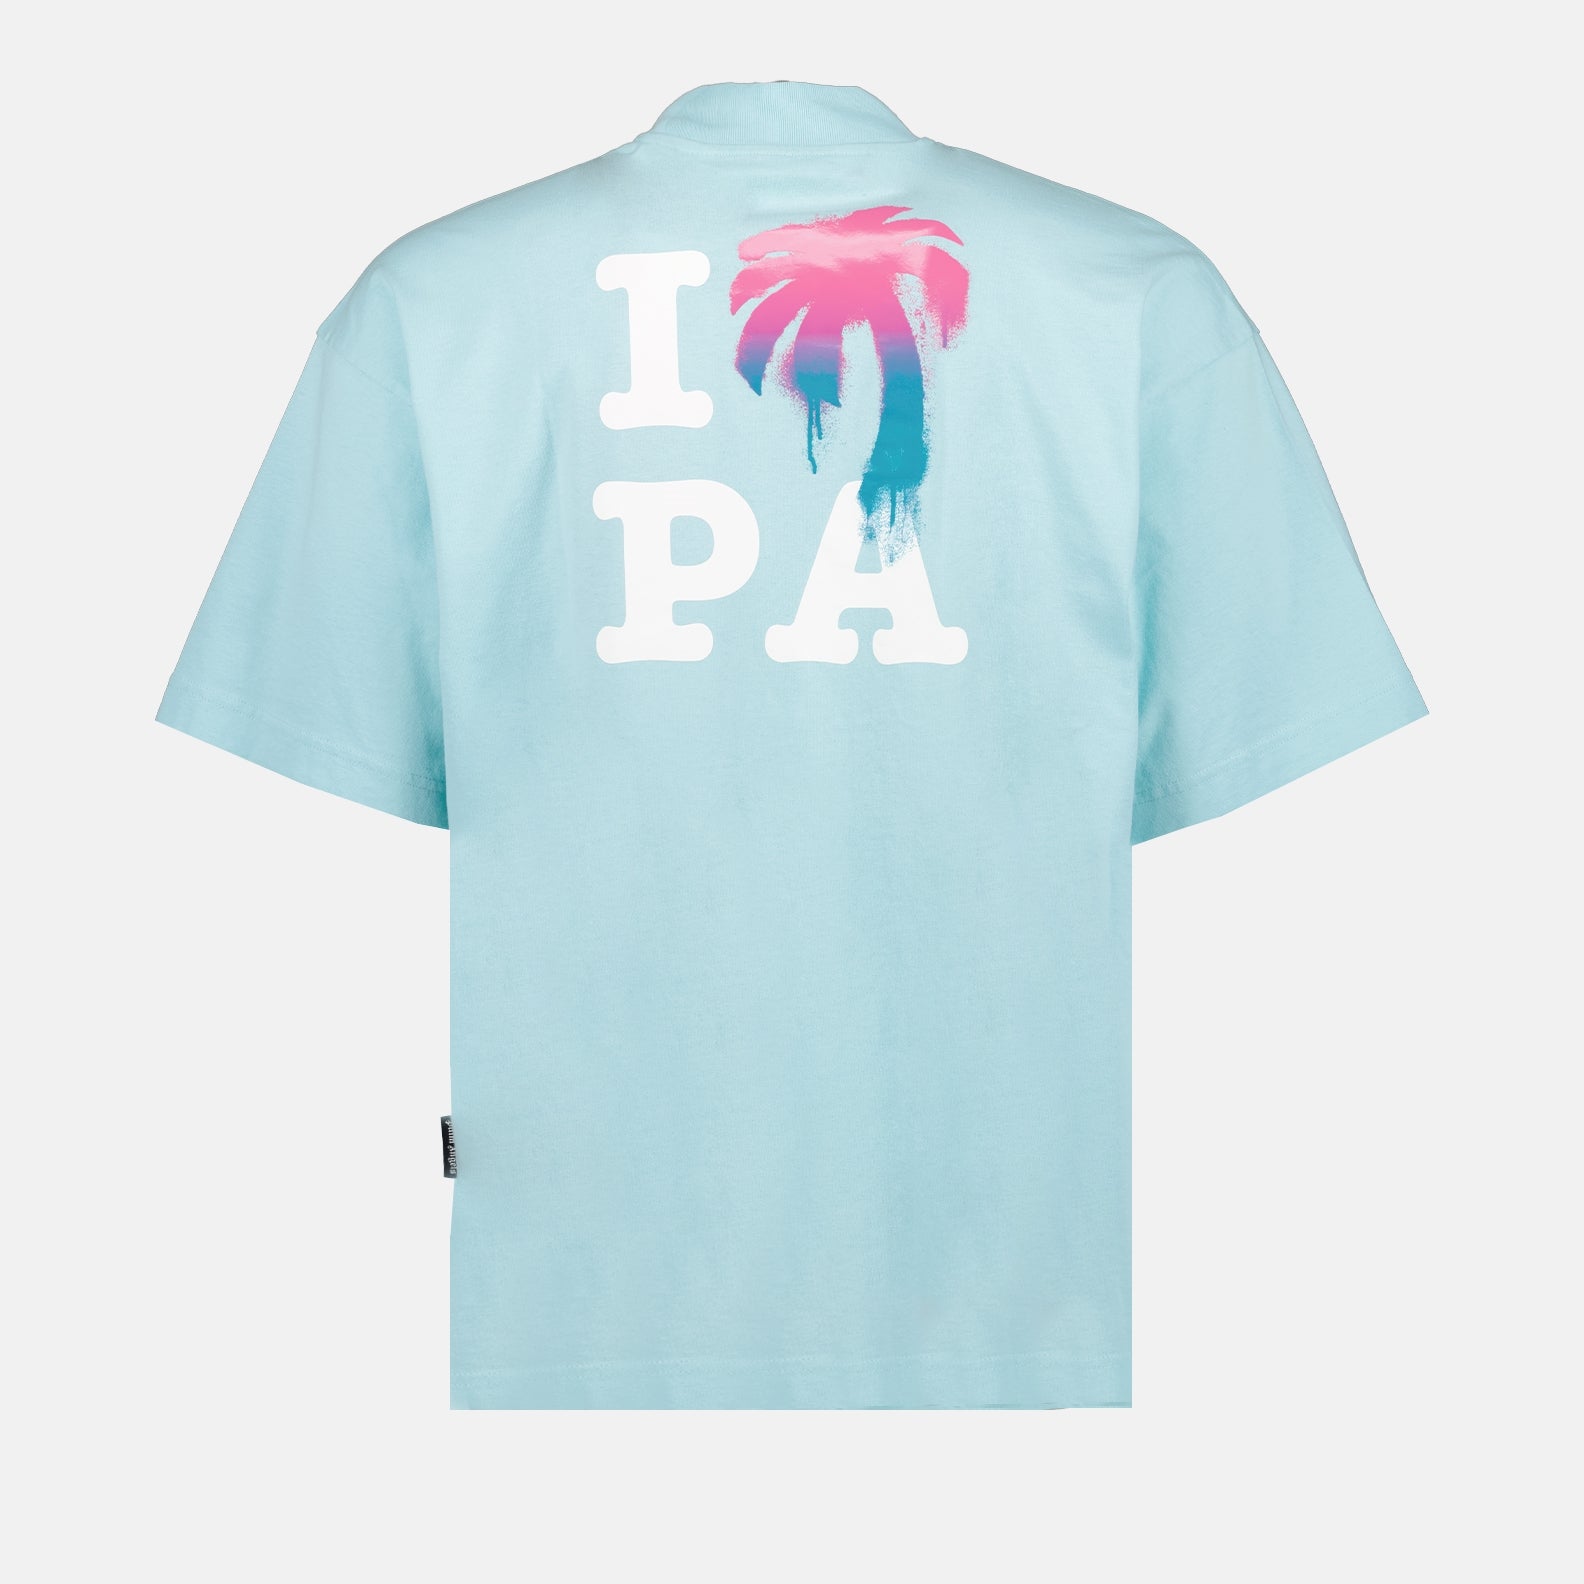 T-shirt I Love PA